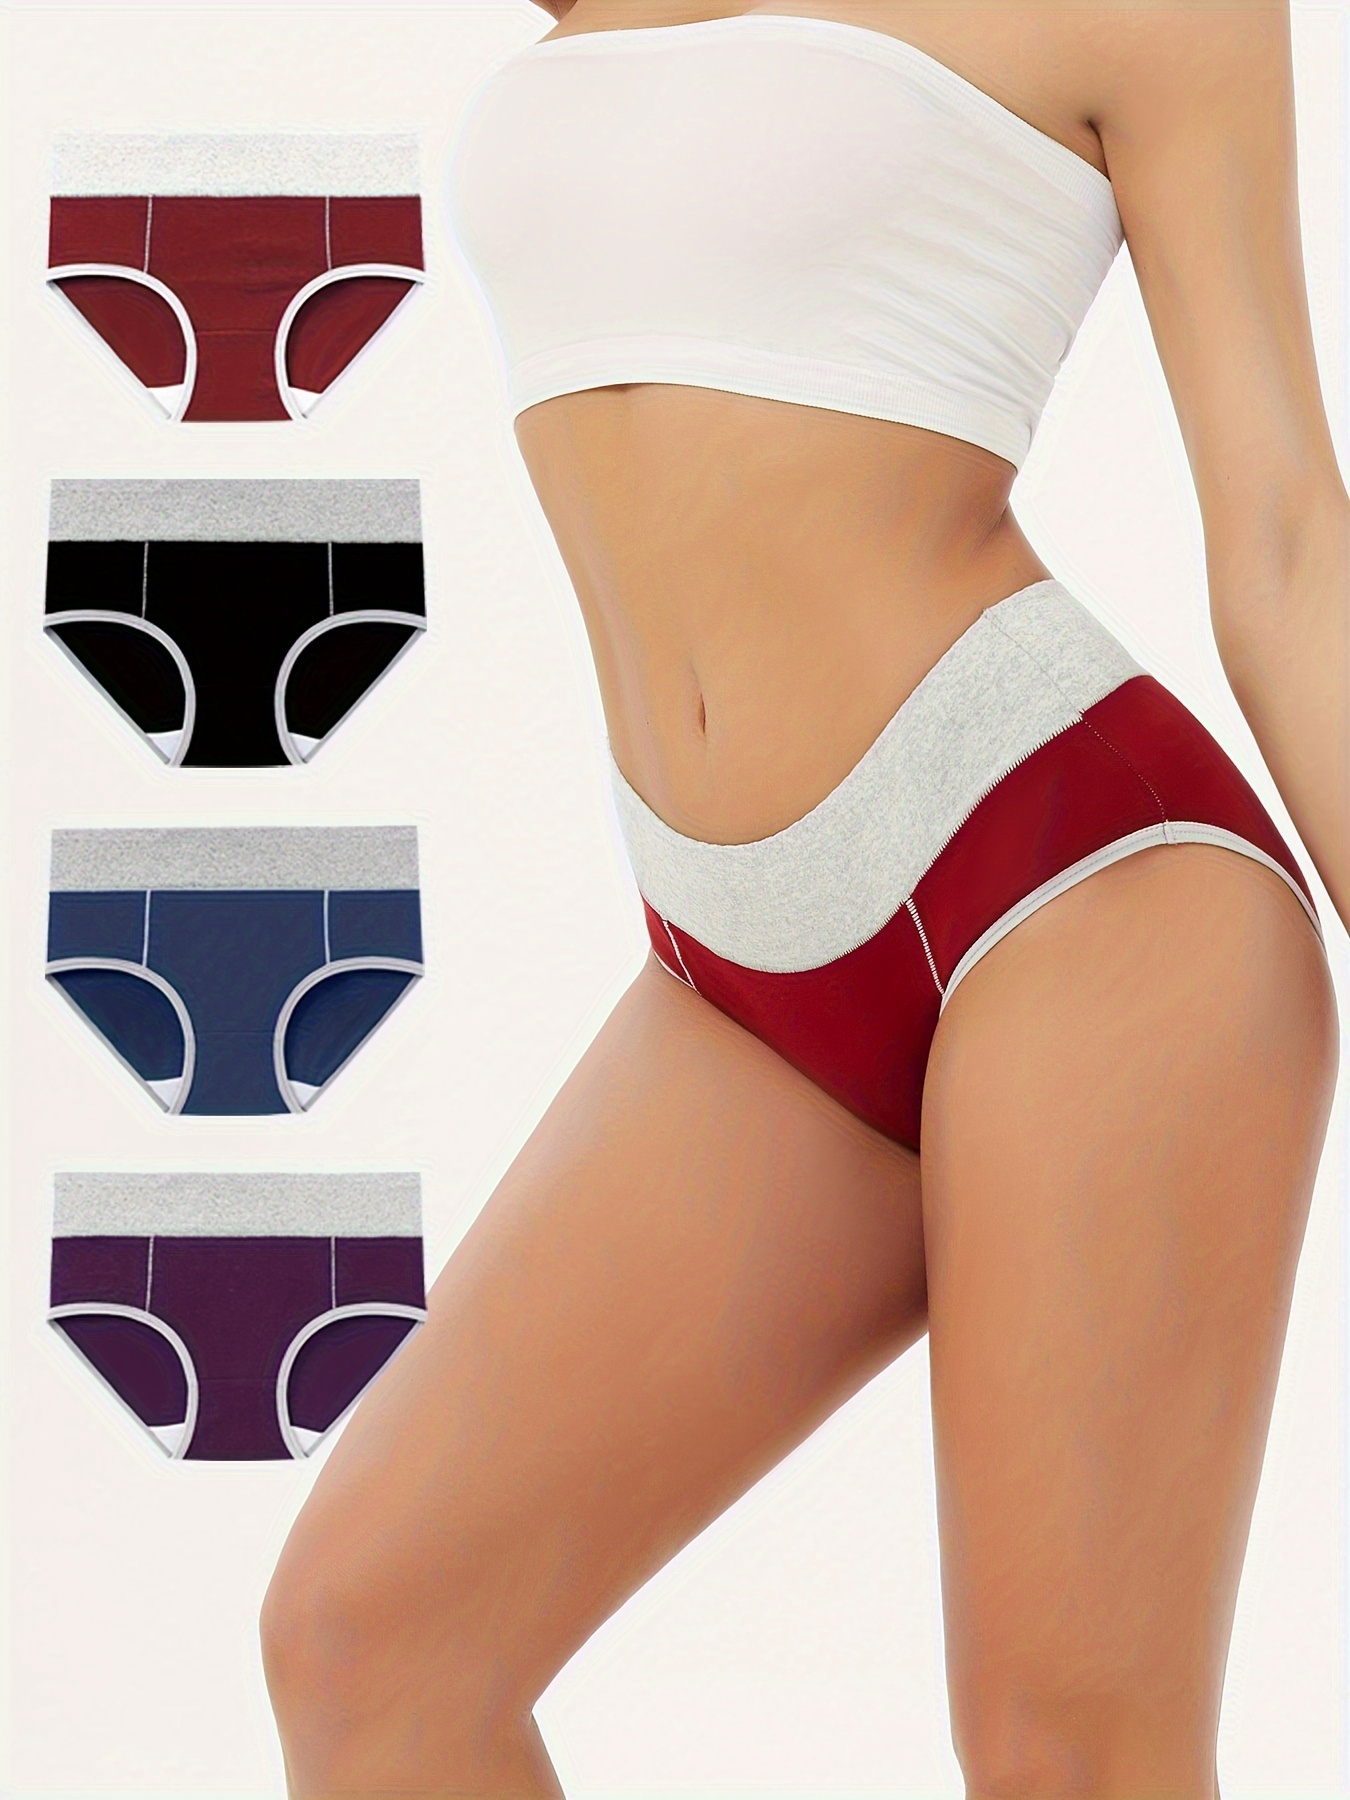 4pcs) Spandex Comfort Underwear Women Briefs Panties Bikini Lingerie